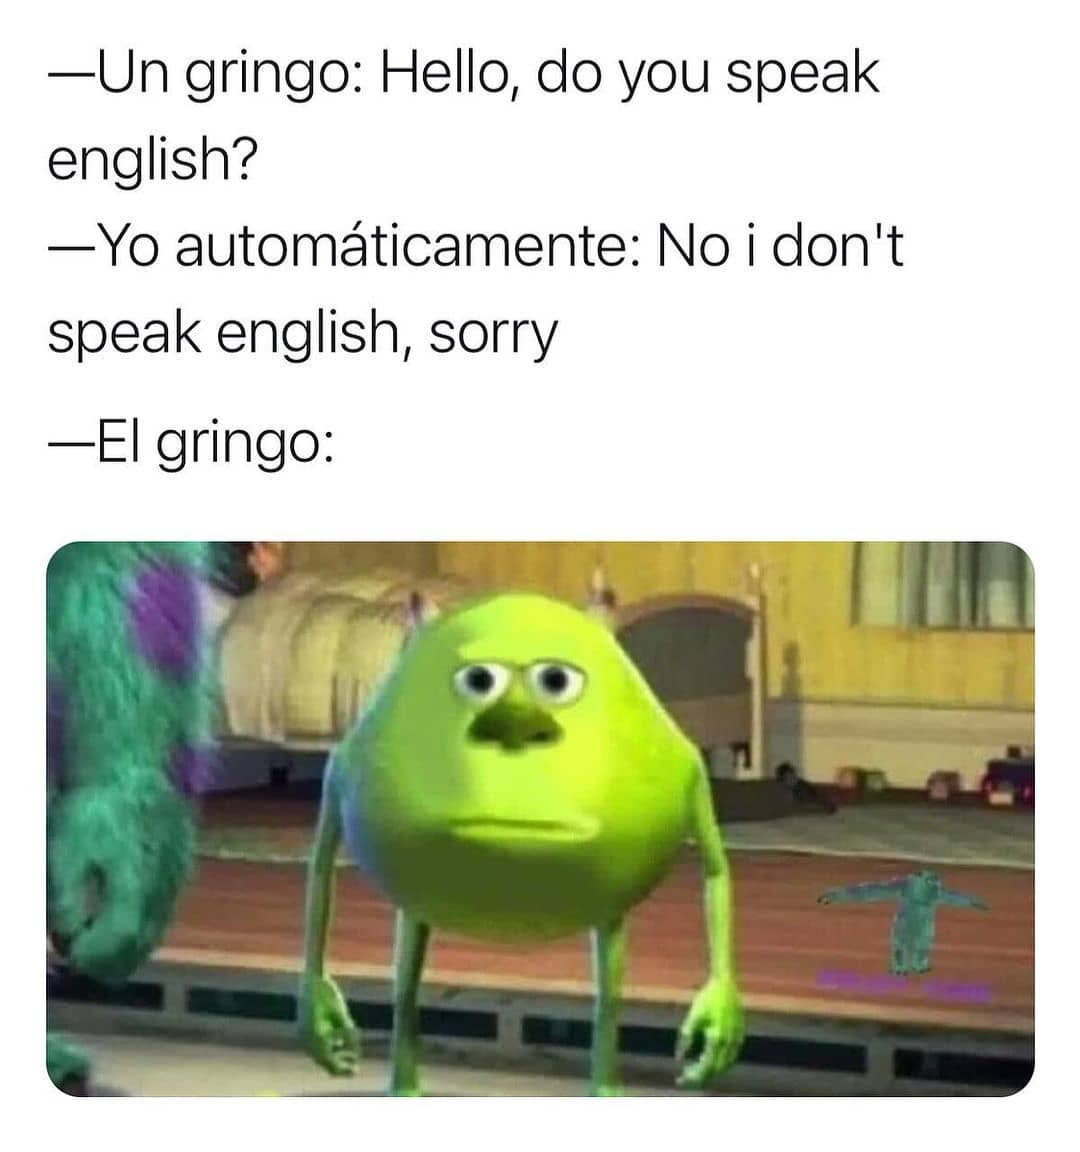 Un gringo: Hello, do you speak english?  Yo automáticamente: No I don't speak English, sorry.  El gringo: